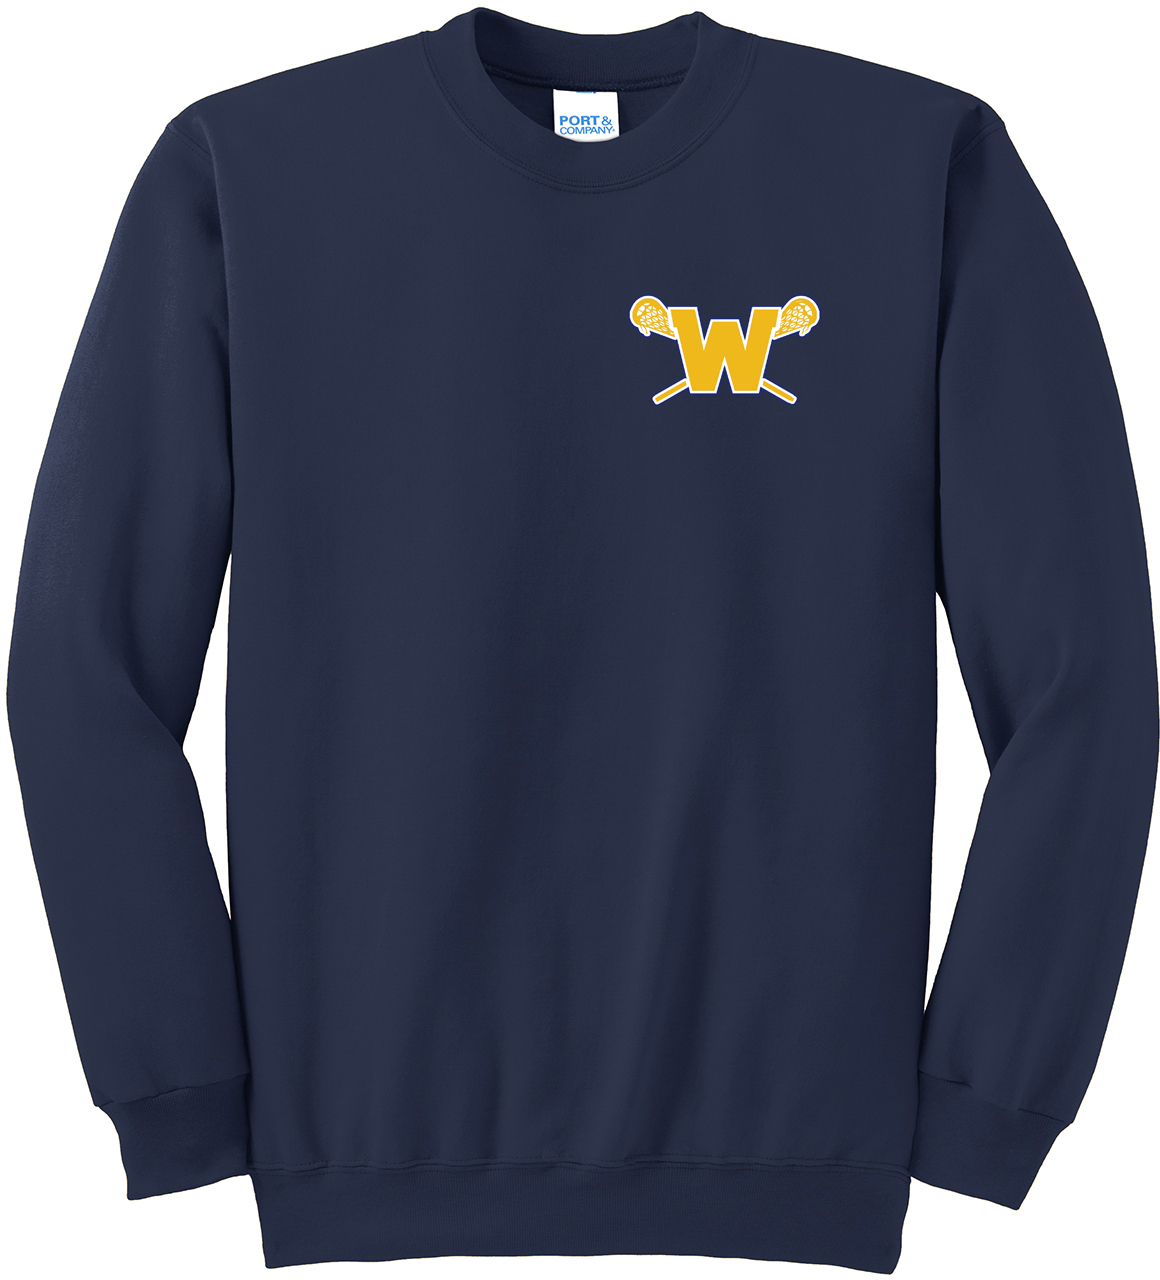 Webster Lacrosse Navy Crew Neck Sweater